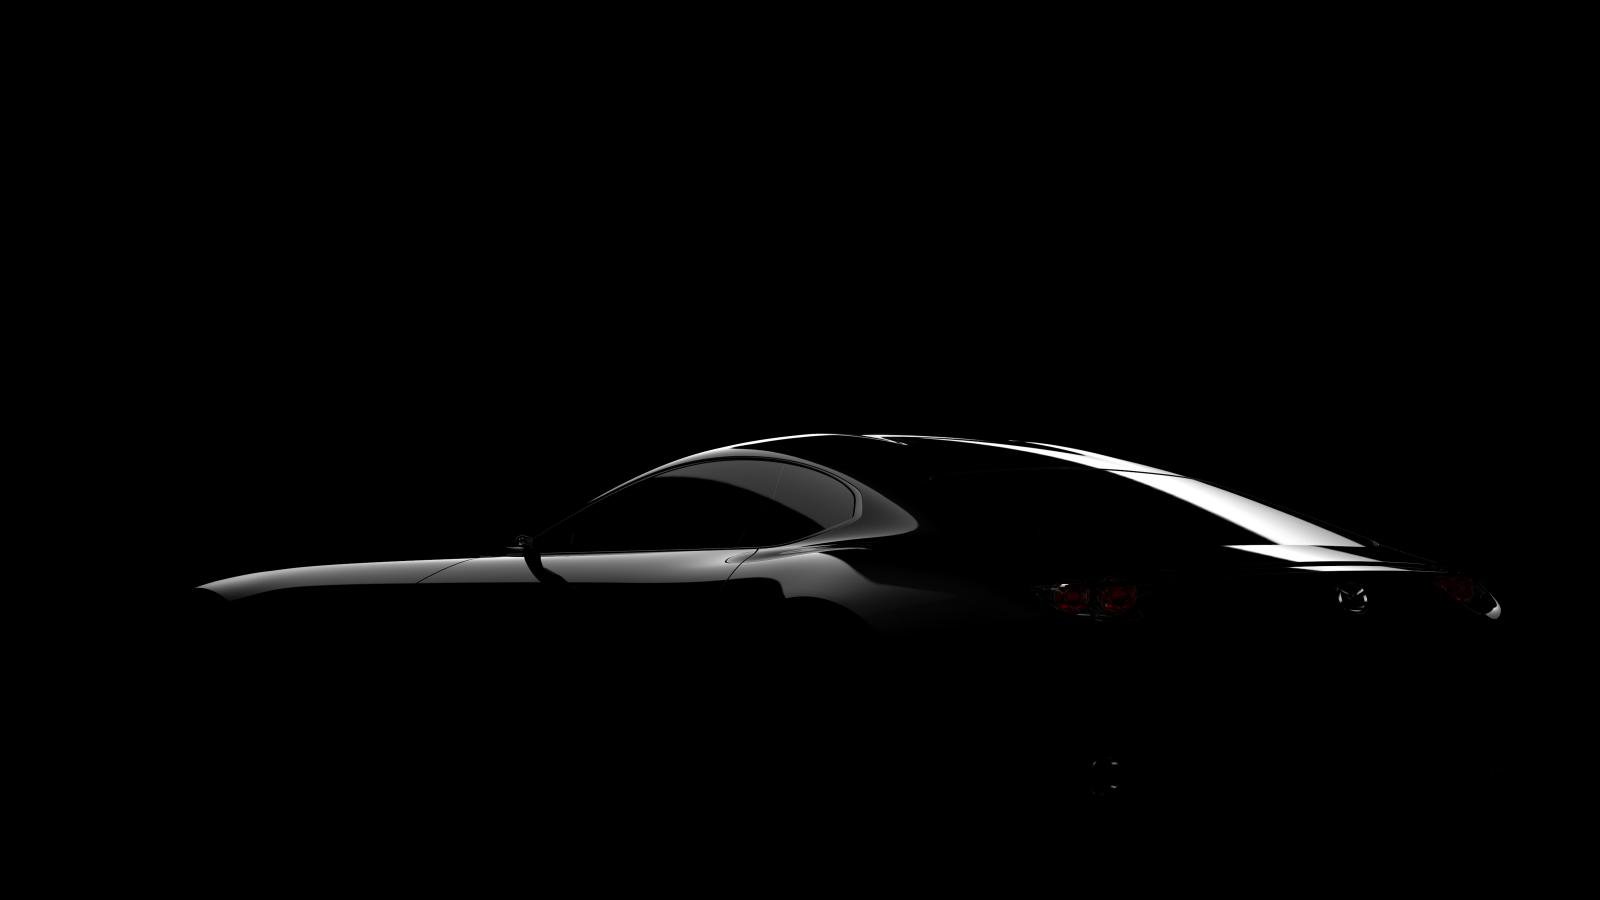 Mazda poodhaluje podobu svého nového konceptu